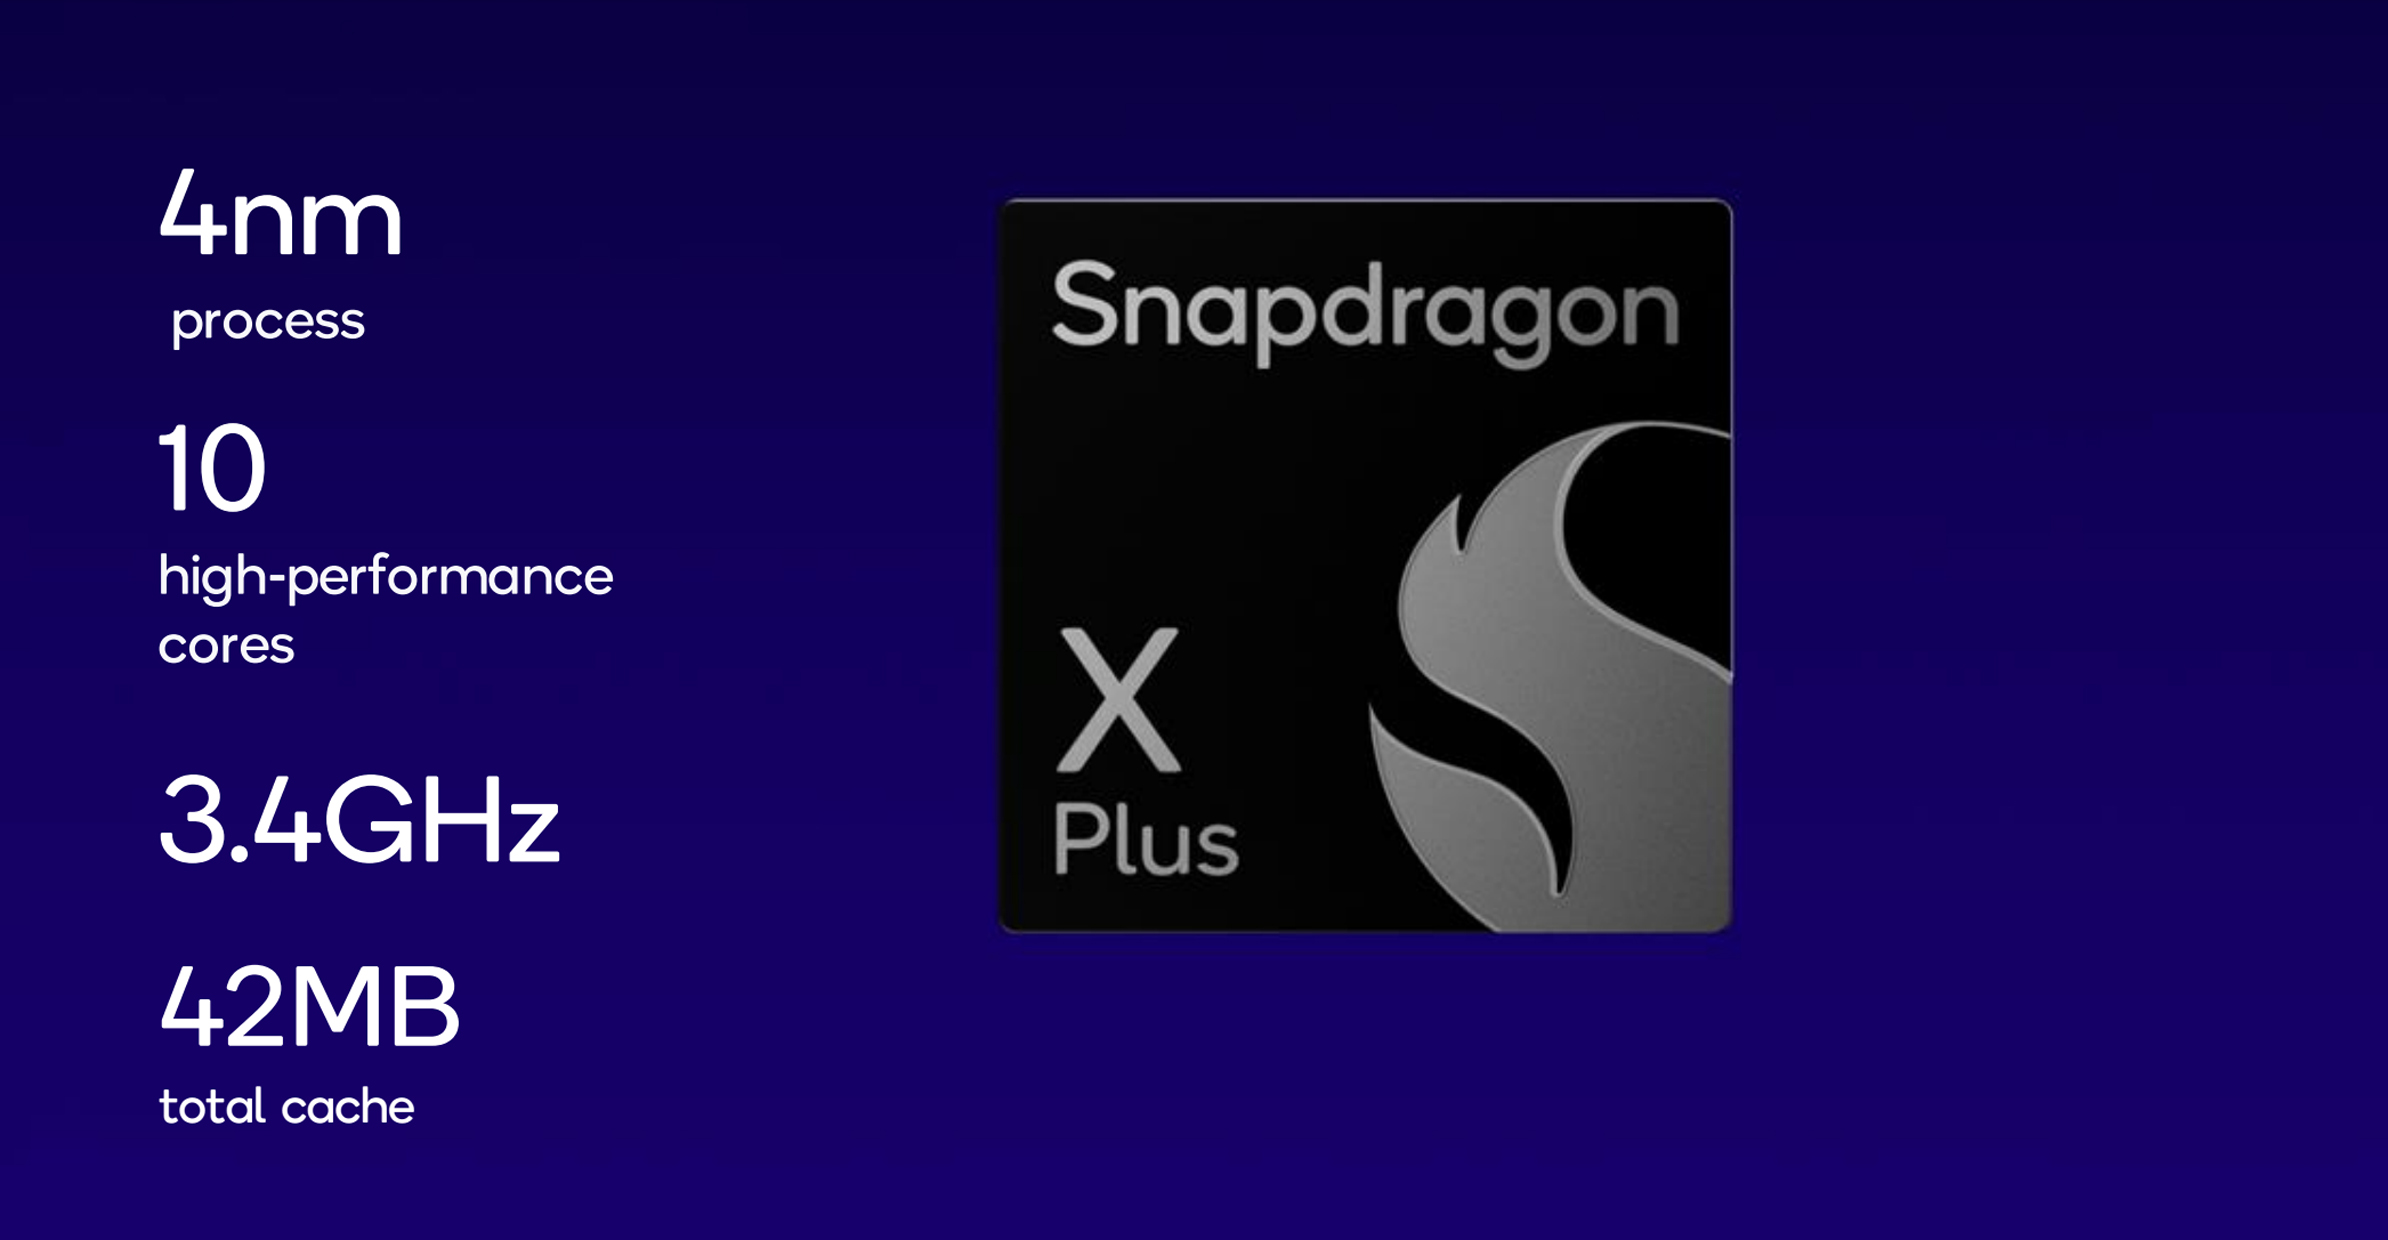 Qualcomm expands Snapdragon X lineup with Snapdragon X Plus platform